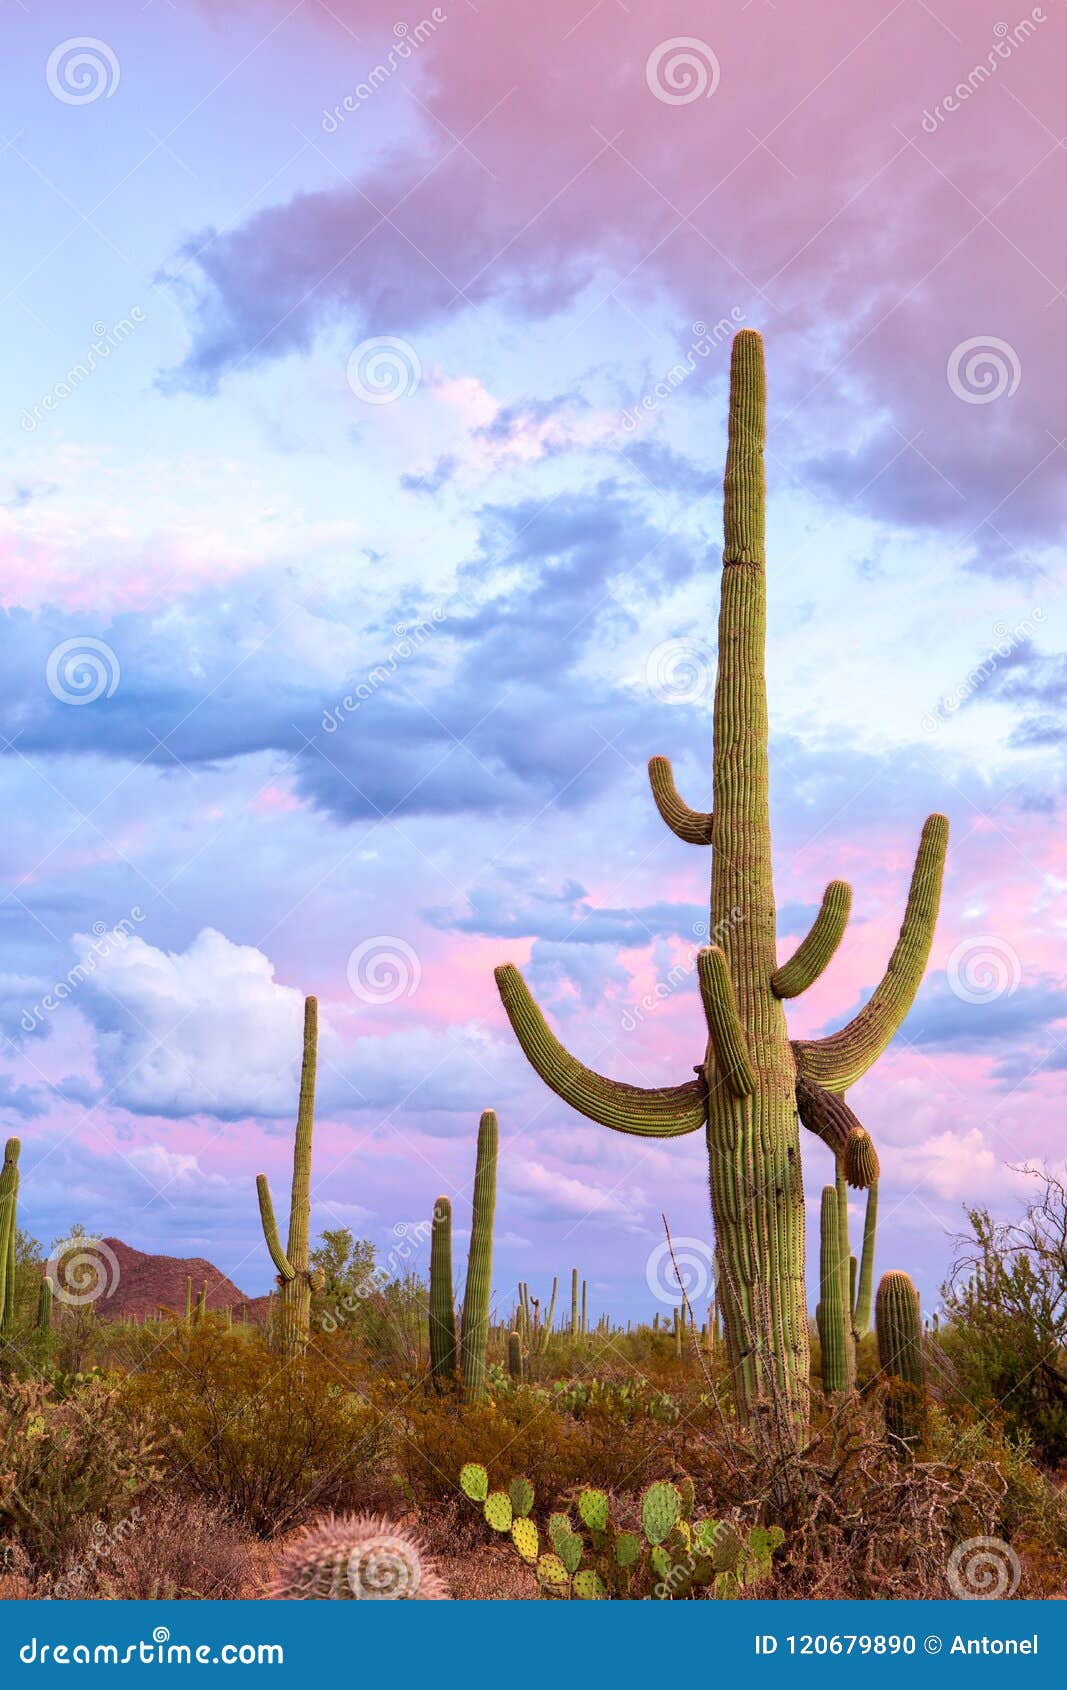 sunset in the saguaro national park, near tucson, southeastern arizona, united states. big saguaro cactus